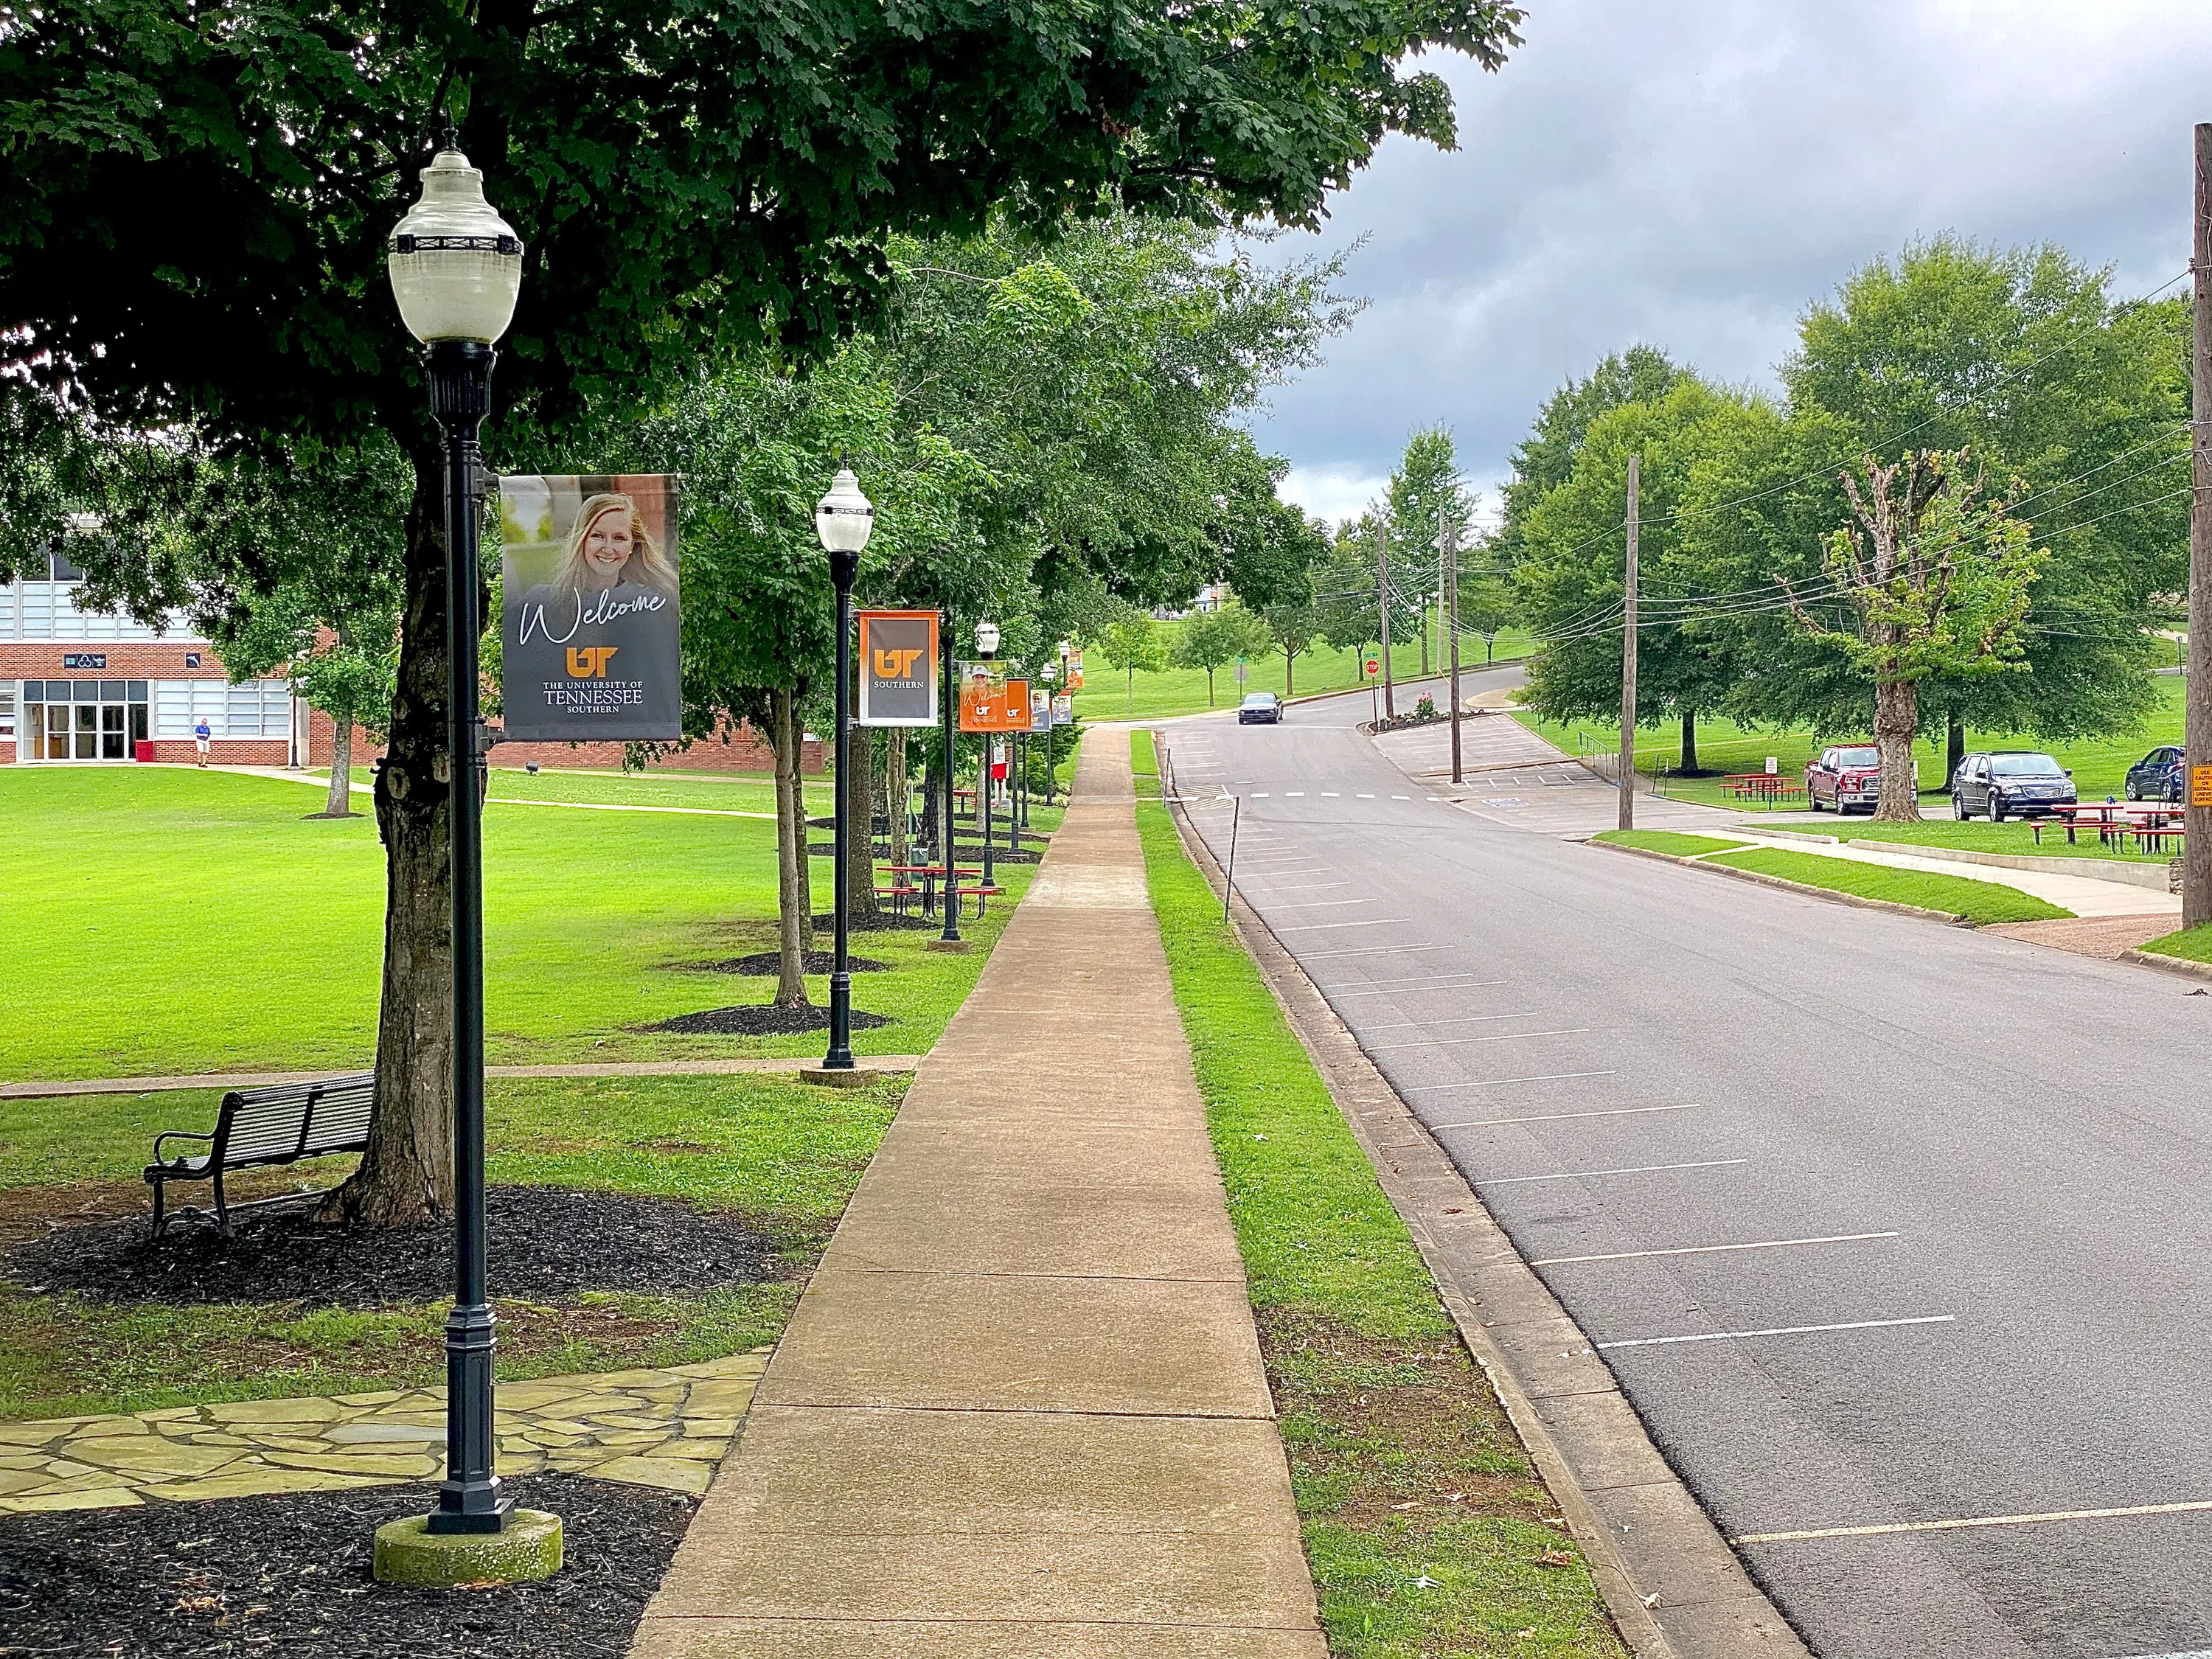 Tree lined street and sidewalks near Campus Green